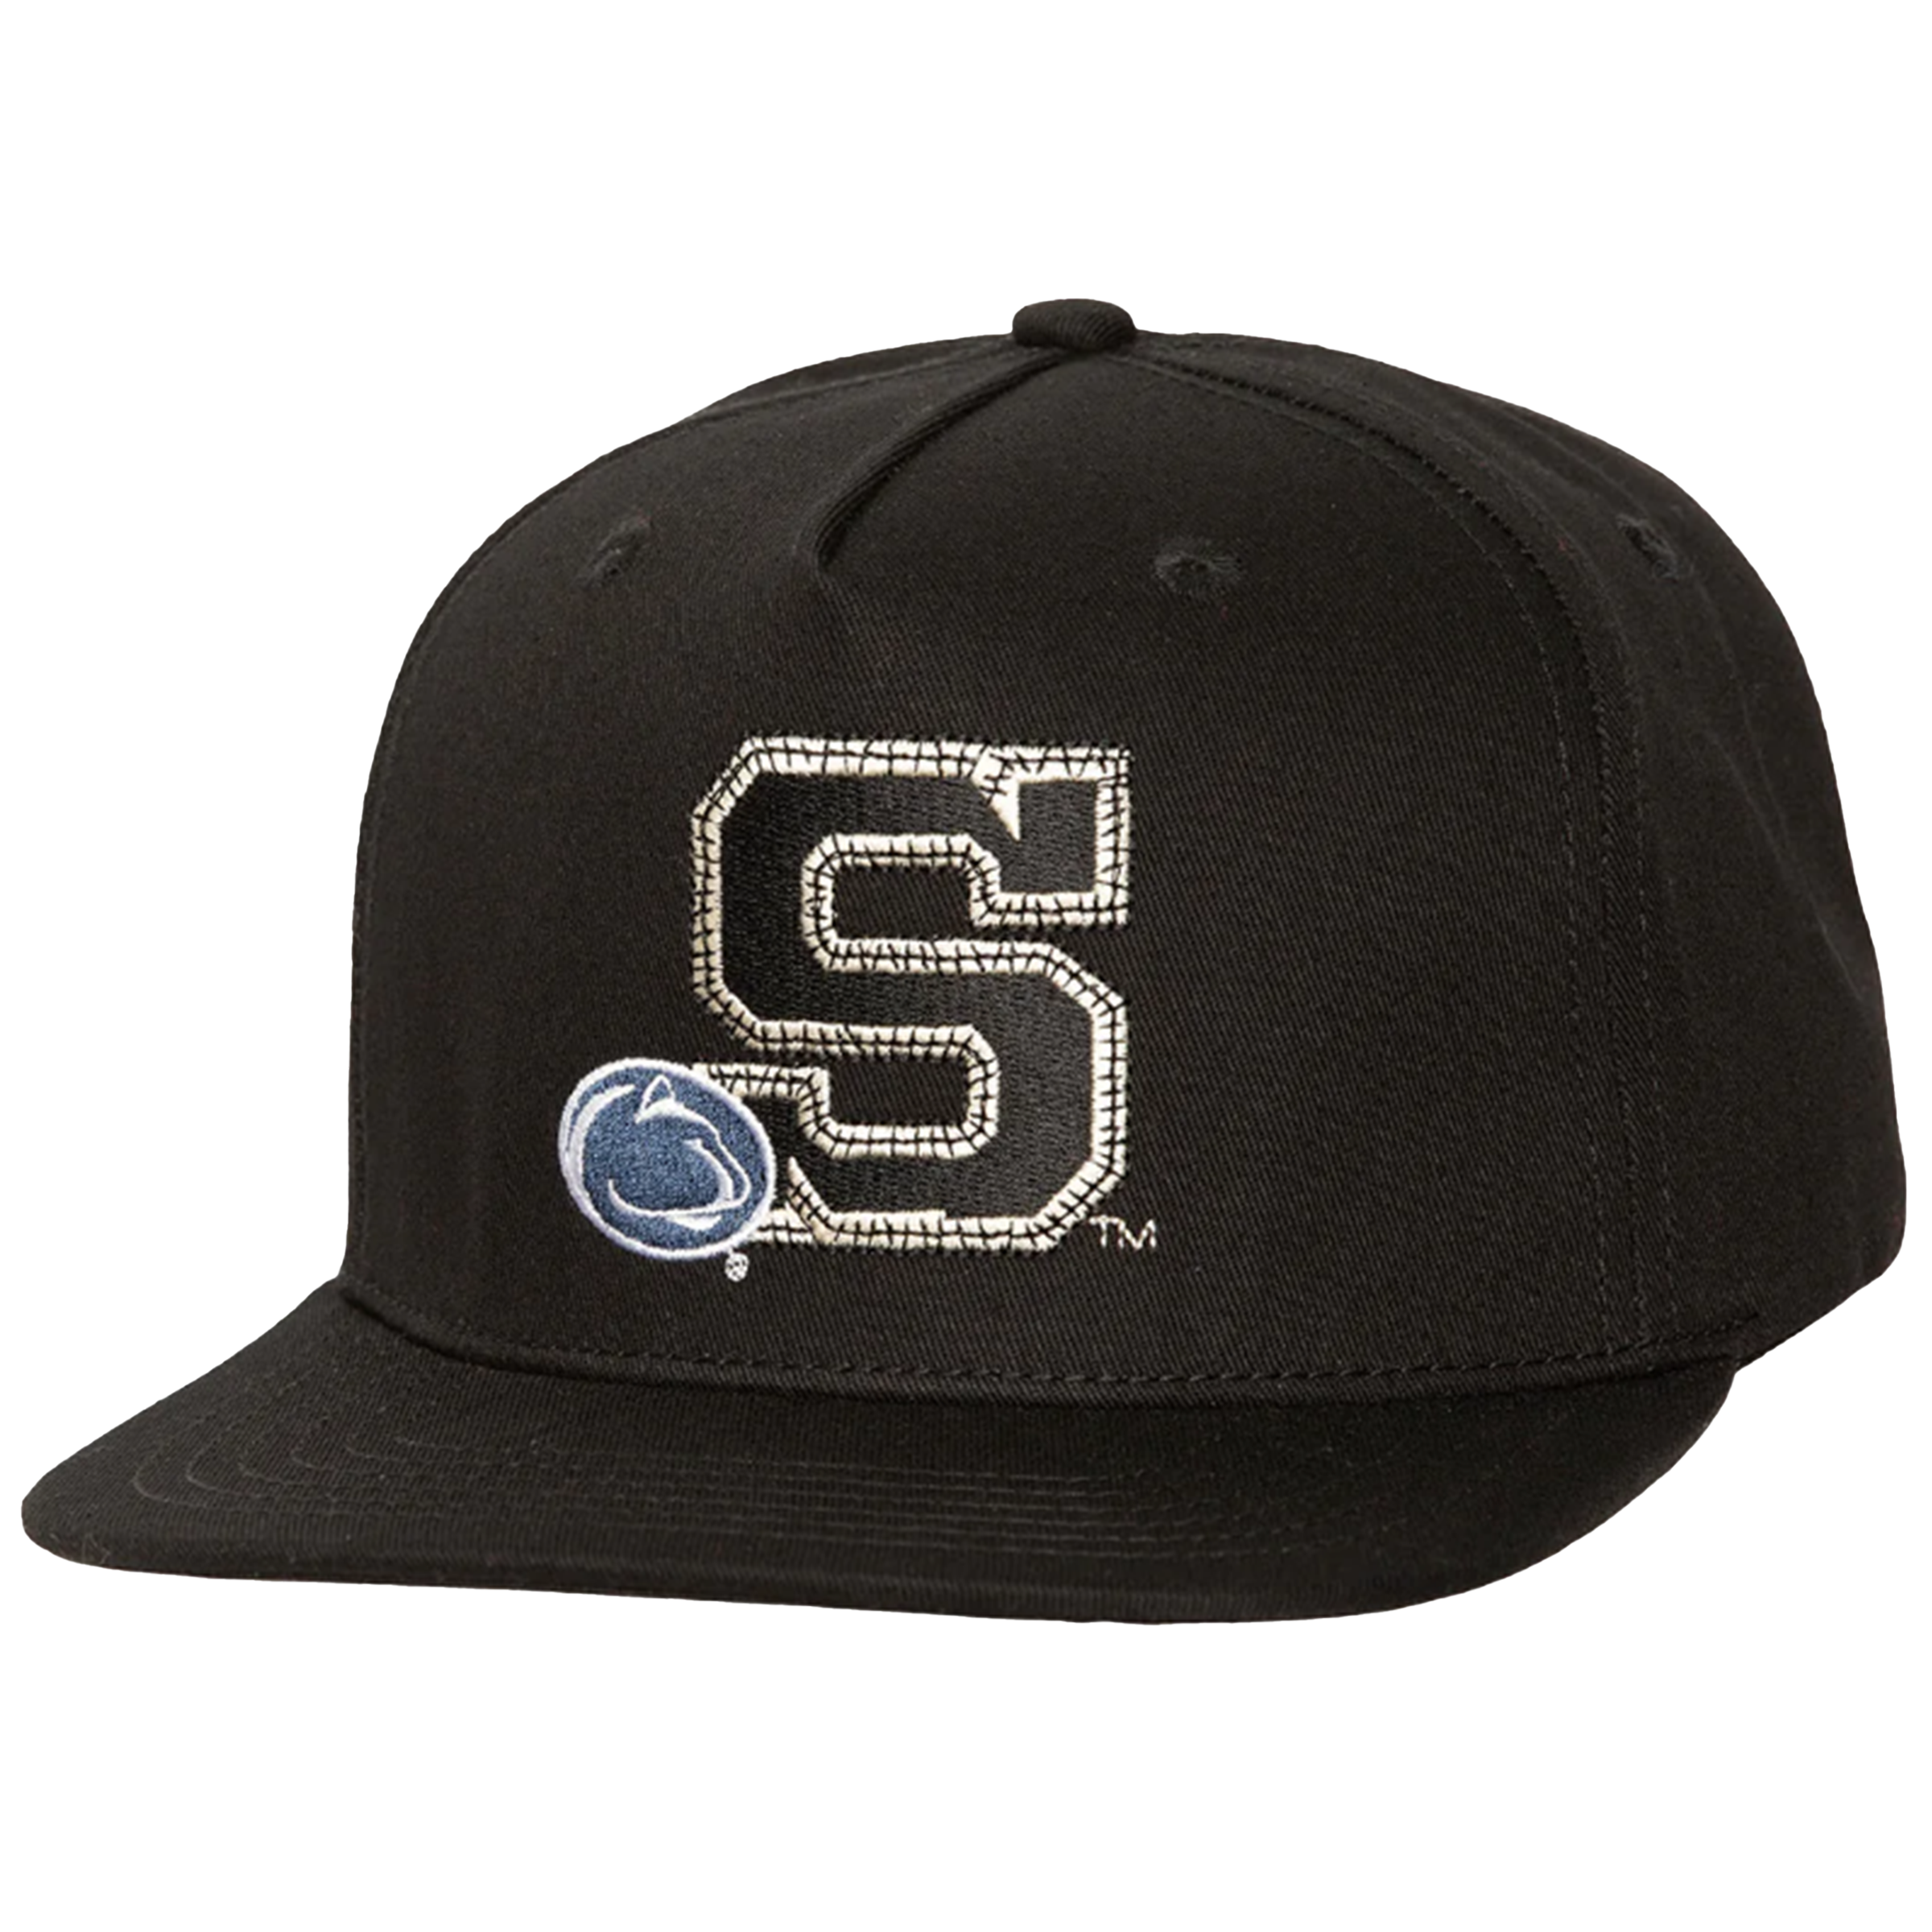 Travis Scott x Mitchell & Ness "Penn State Nittany Lions" Snapback Hat